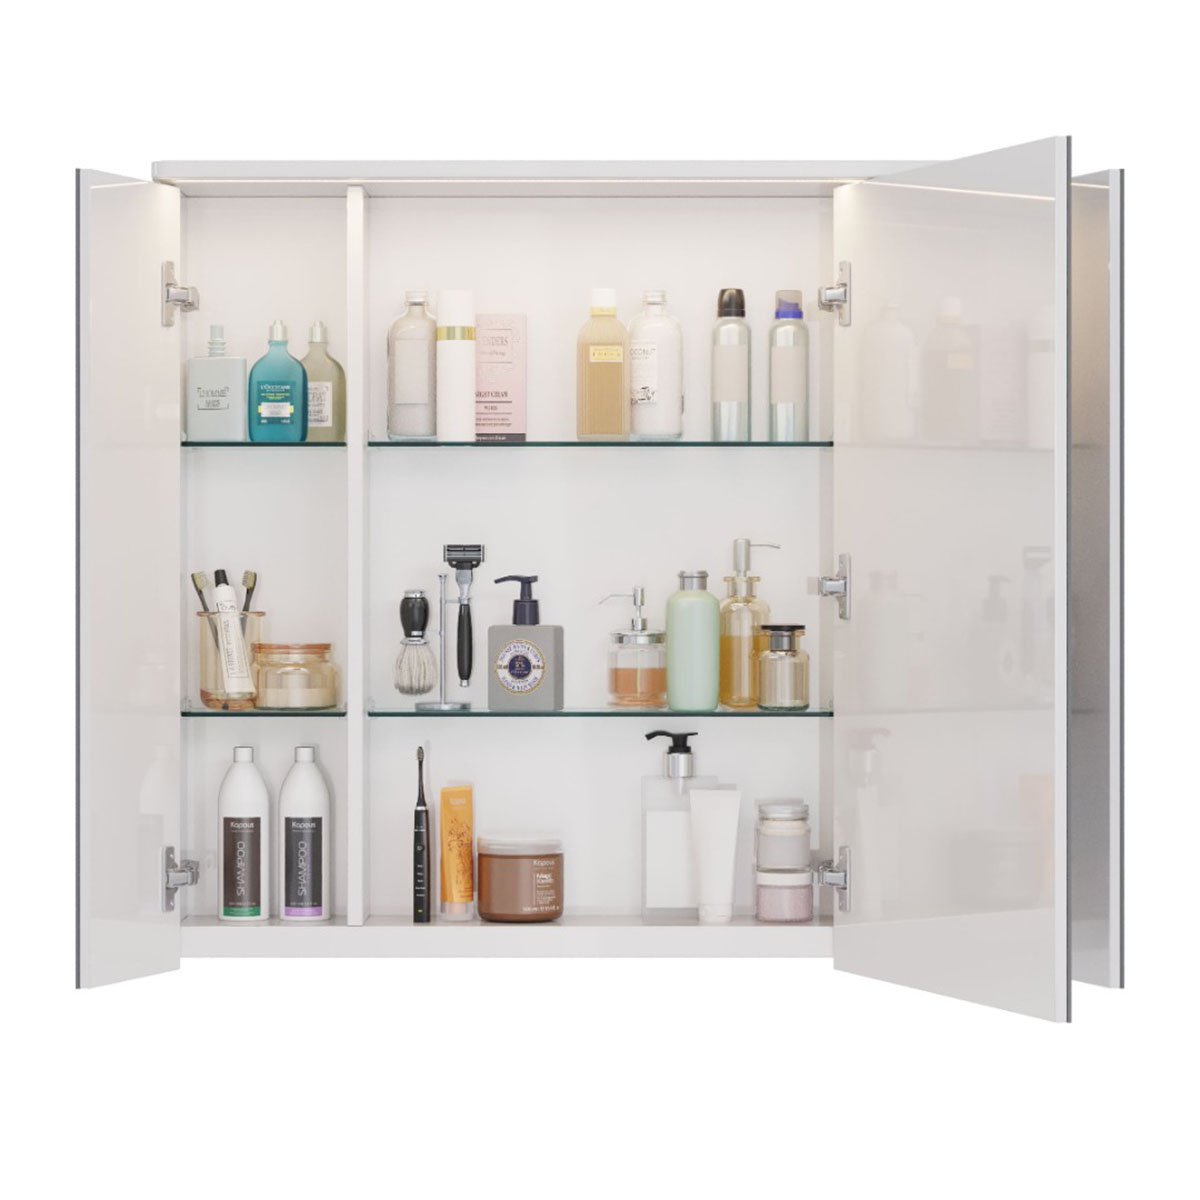 Шкаф зеркальный Lemark ZENON 90х80 см 3-х дверный, с козырьком-подсветкой, с розеткой, цвет корпуса: Белый глянец